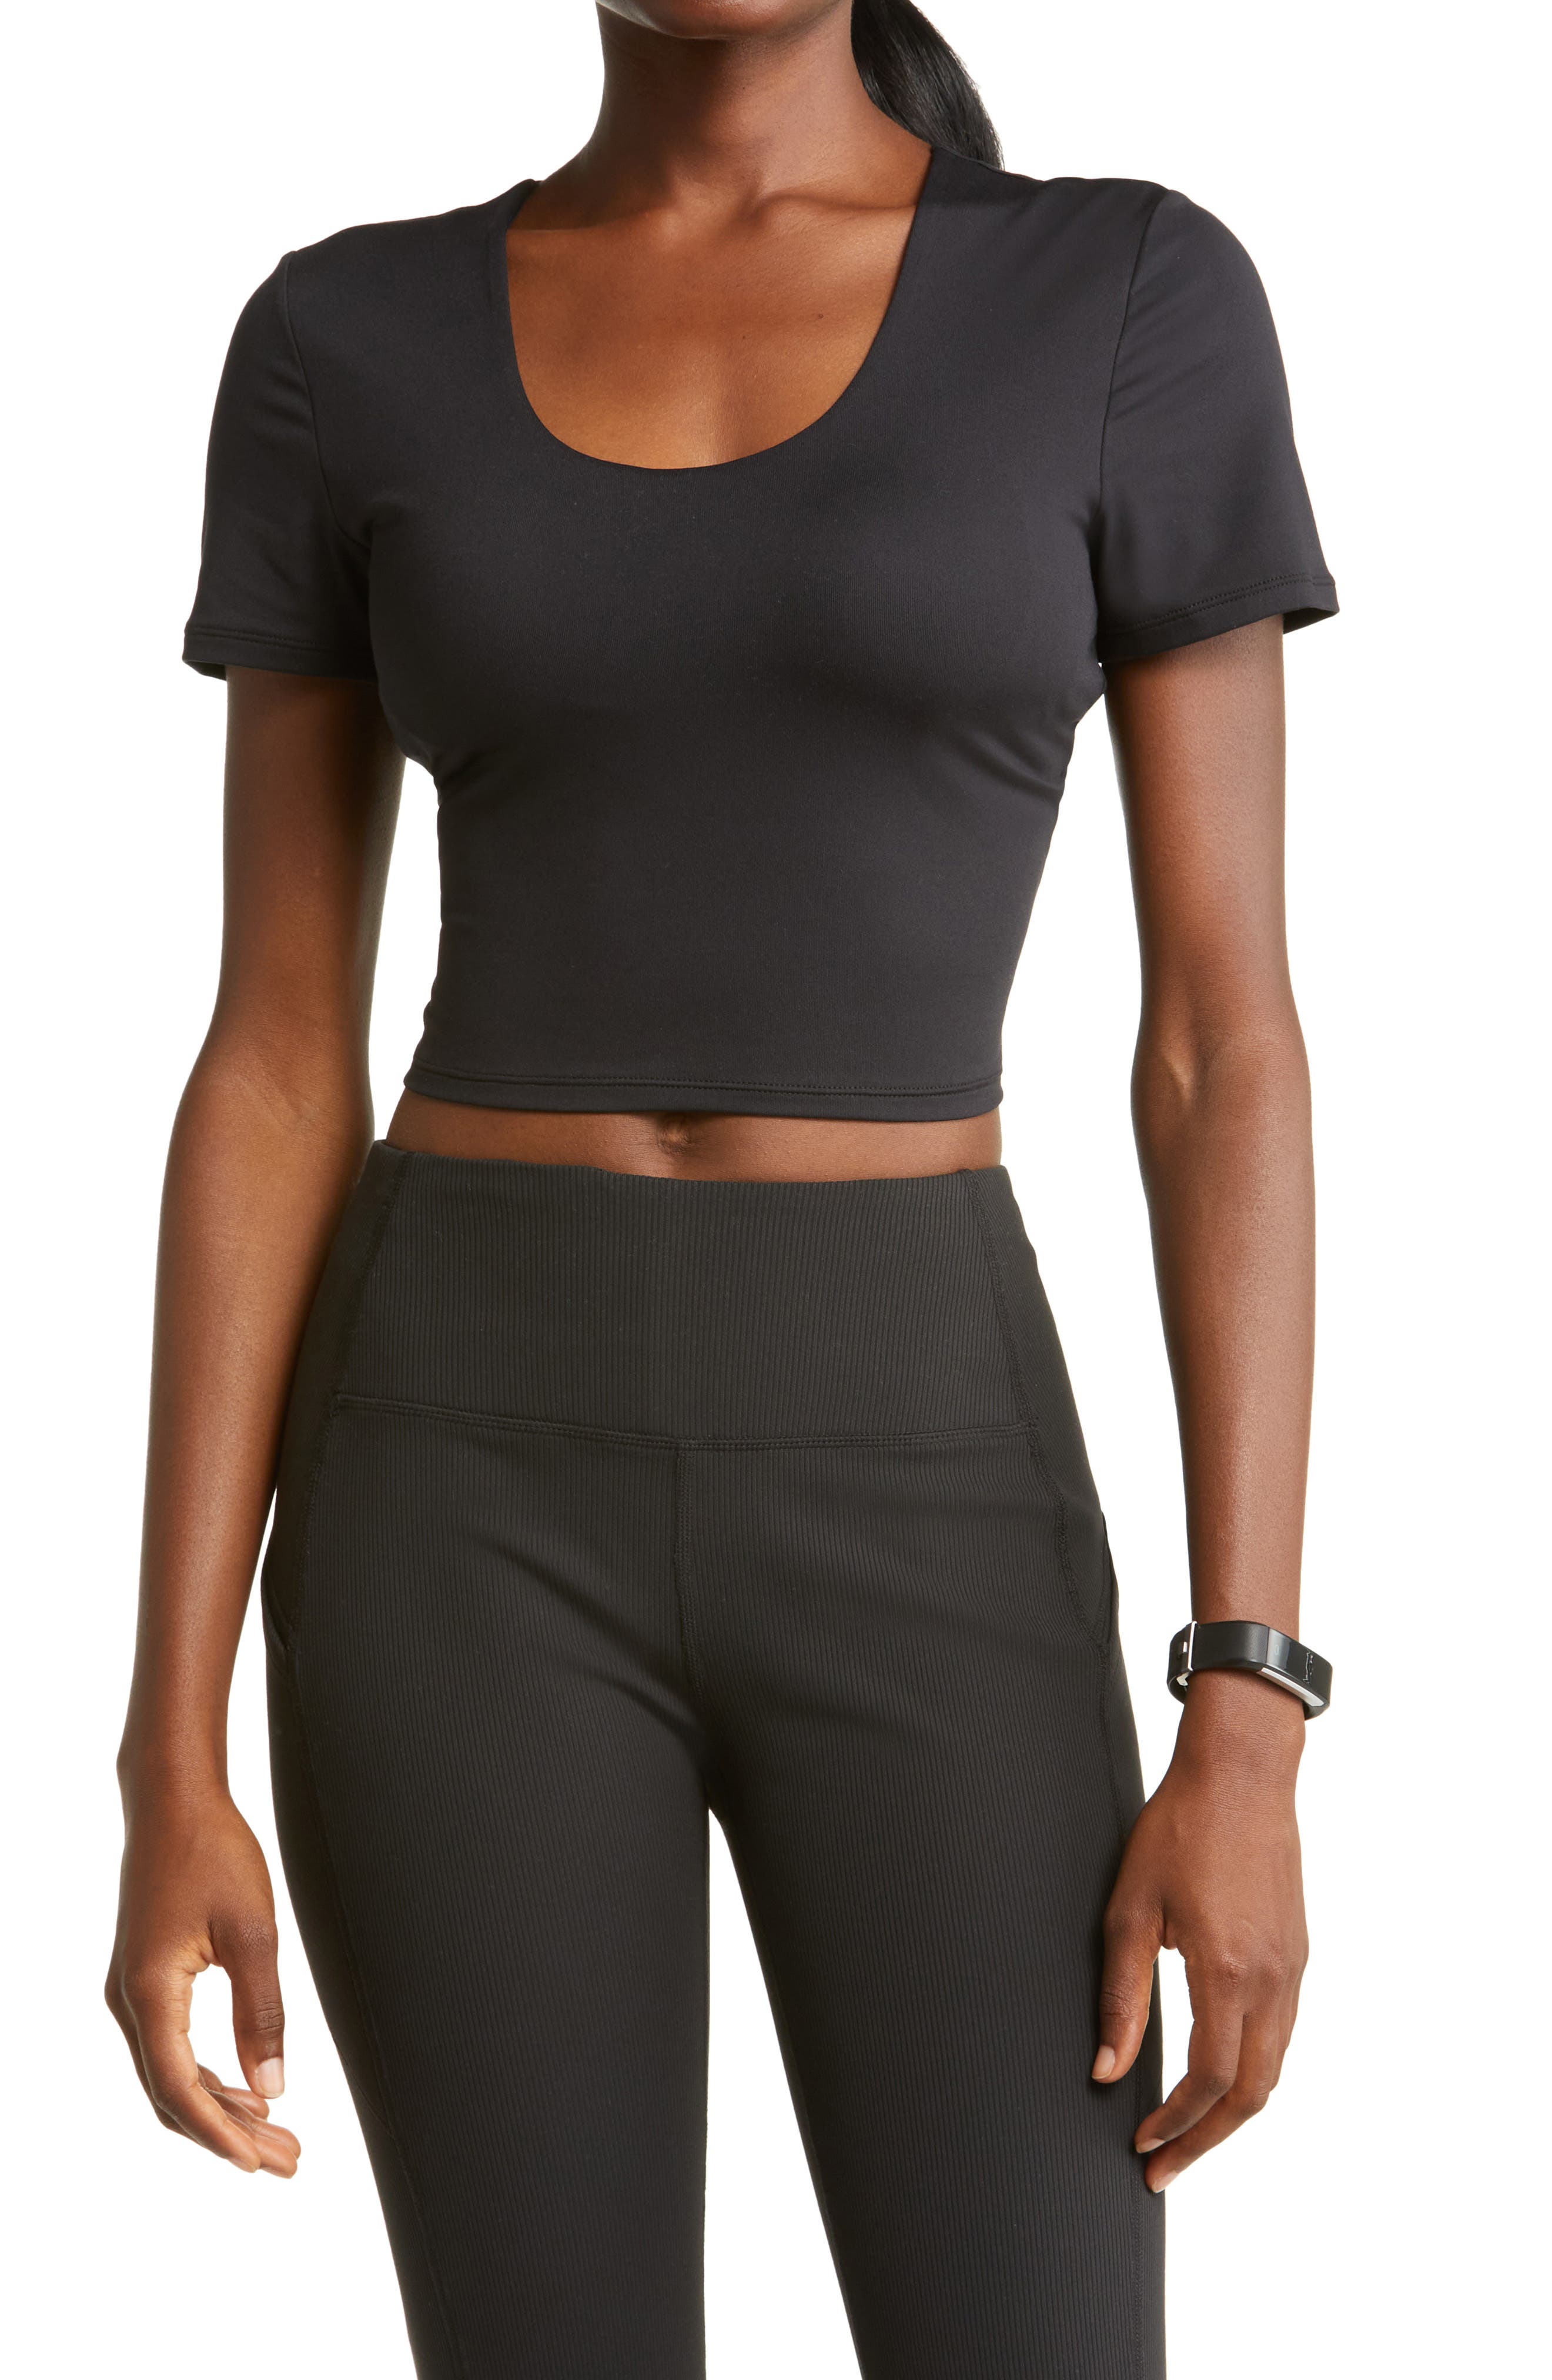 ÖNNE crop top WOMEN FASHION Shirts & T-shirts Crop top Sports discount 59% Black/White L 